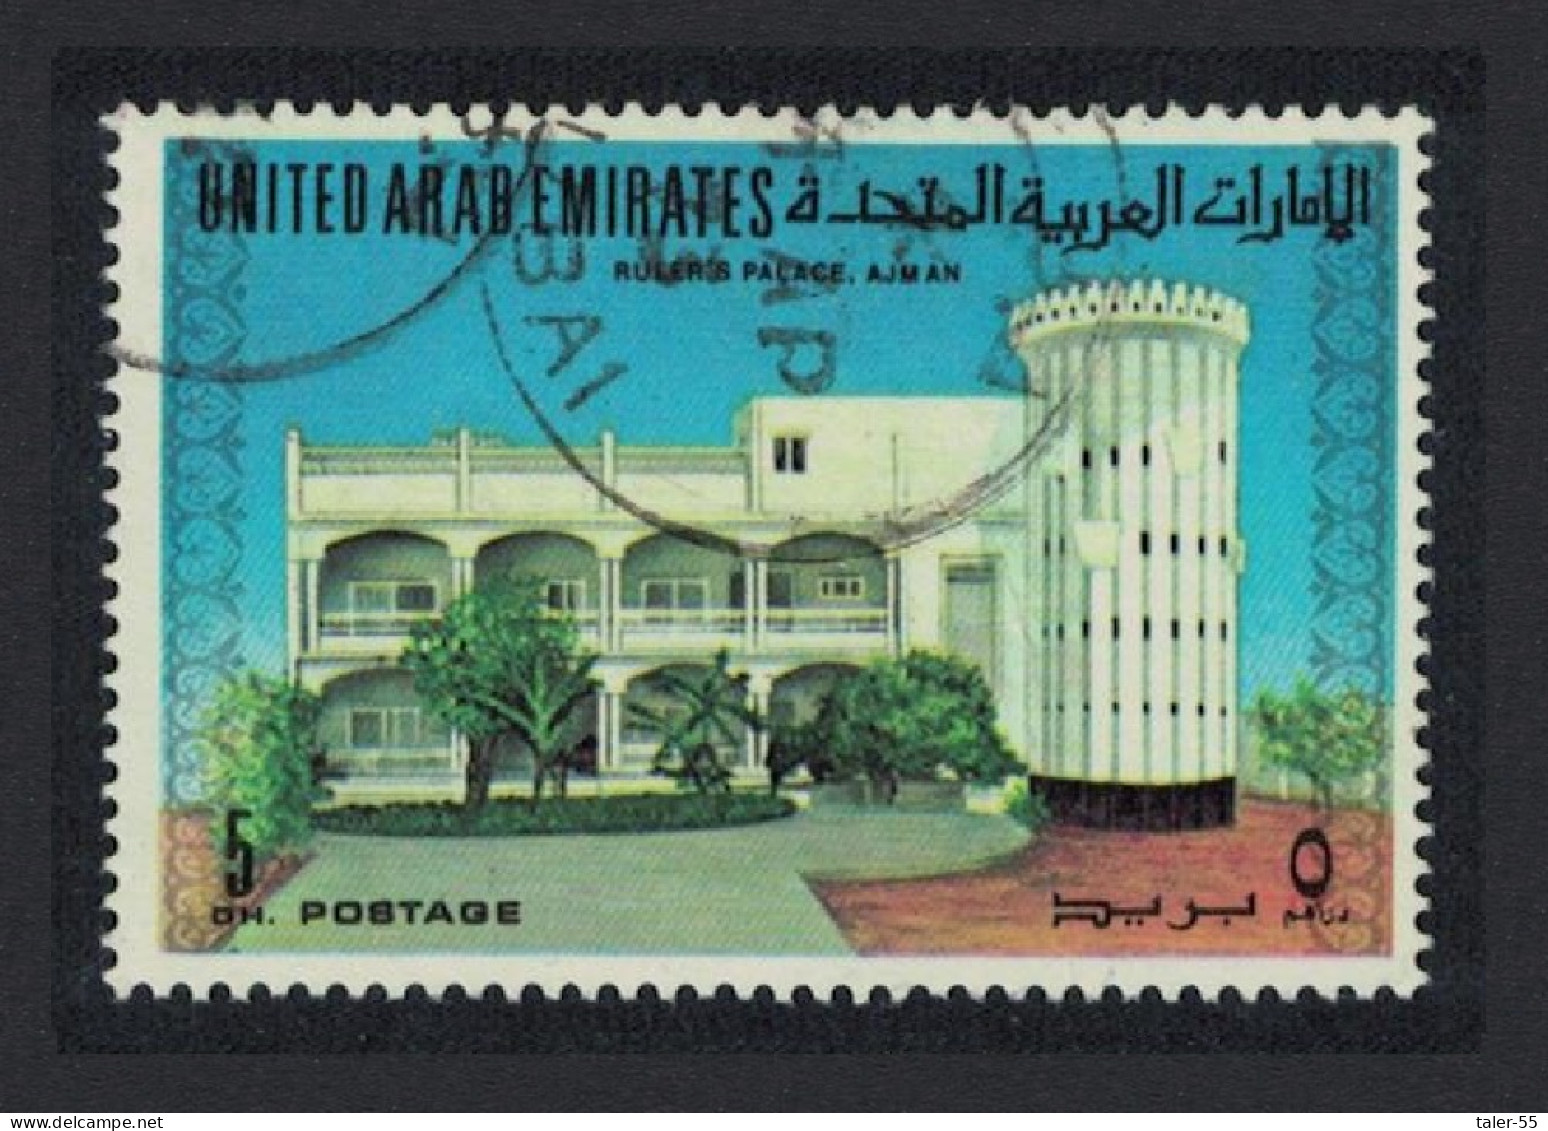 United Arab Emirates Ruler's Palace Ajman 5 Dh 1973 MNH SG#11 MI#11 - Verenigde Arabische Emiraten